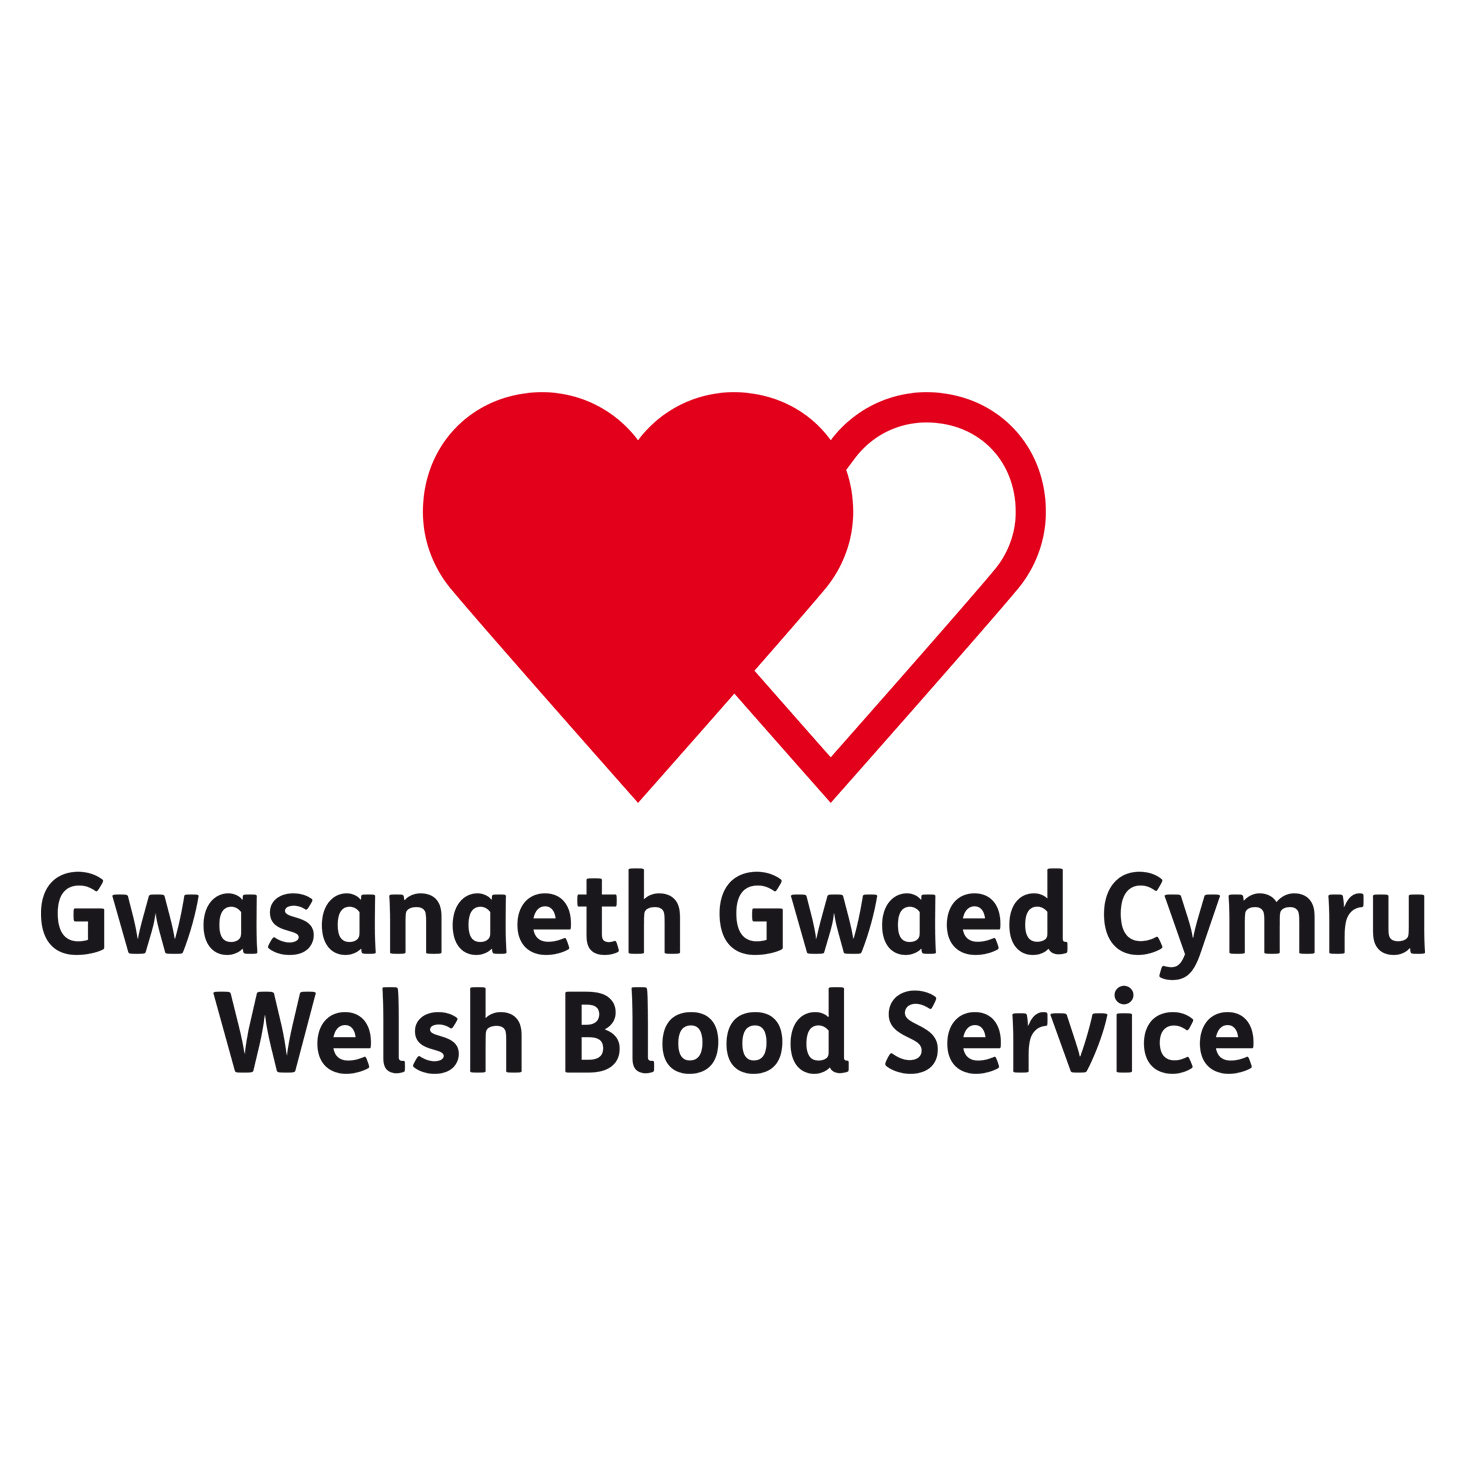 Welsh Blood Service